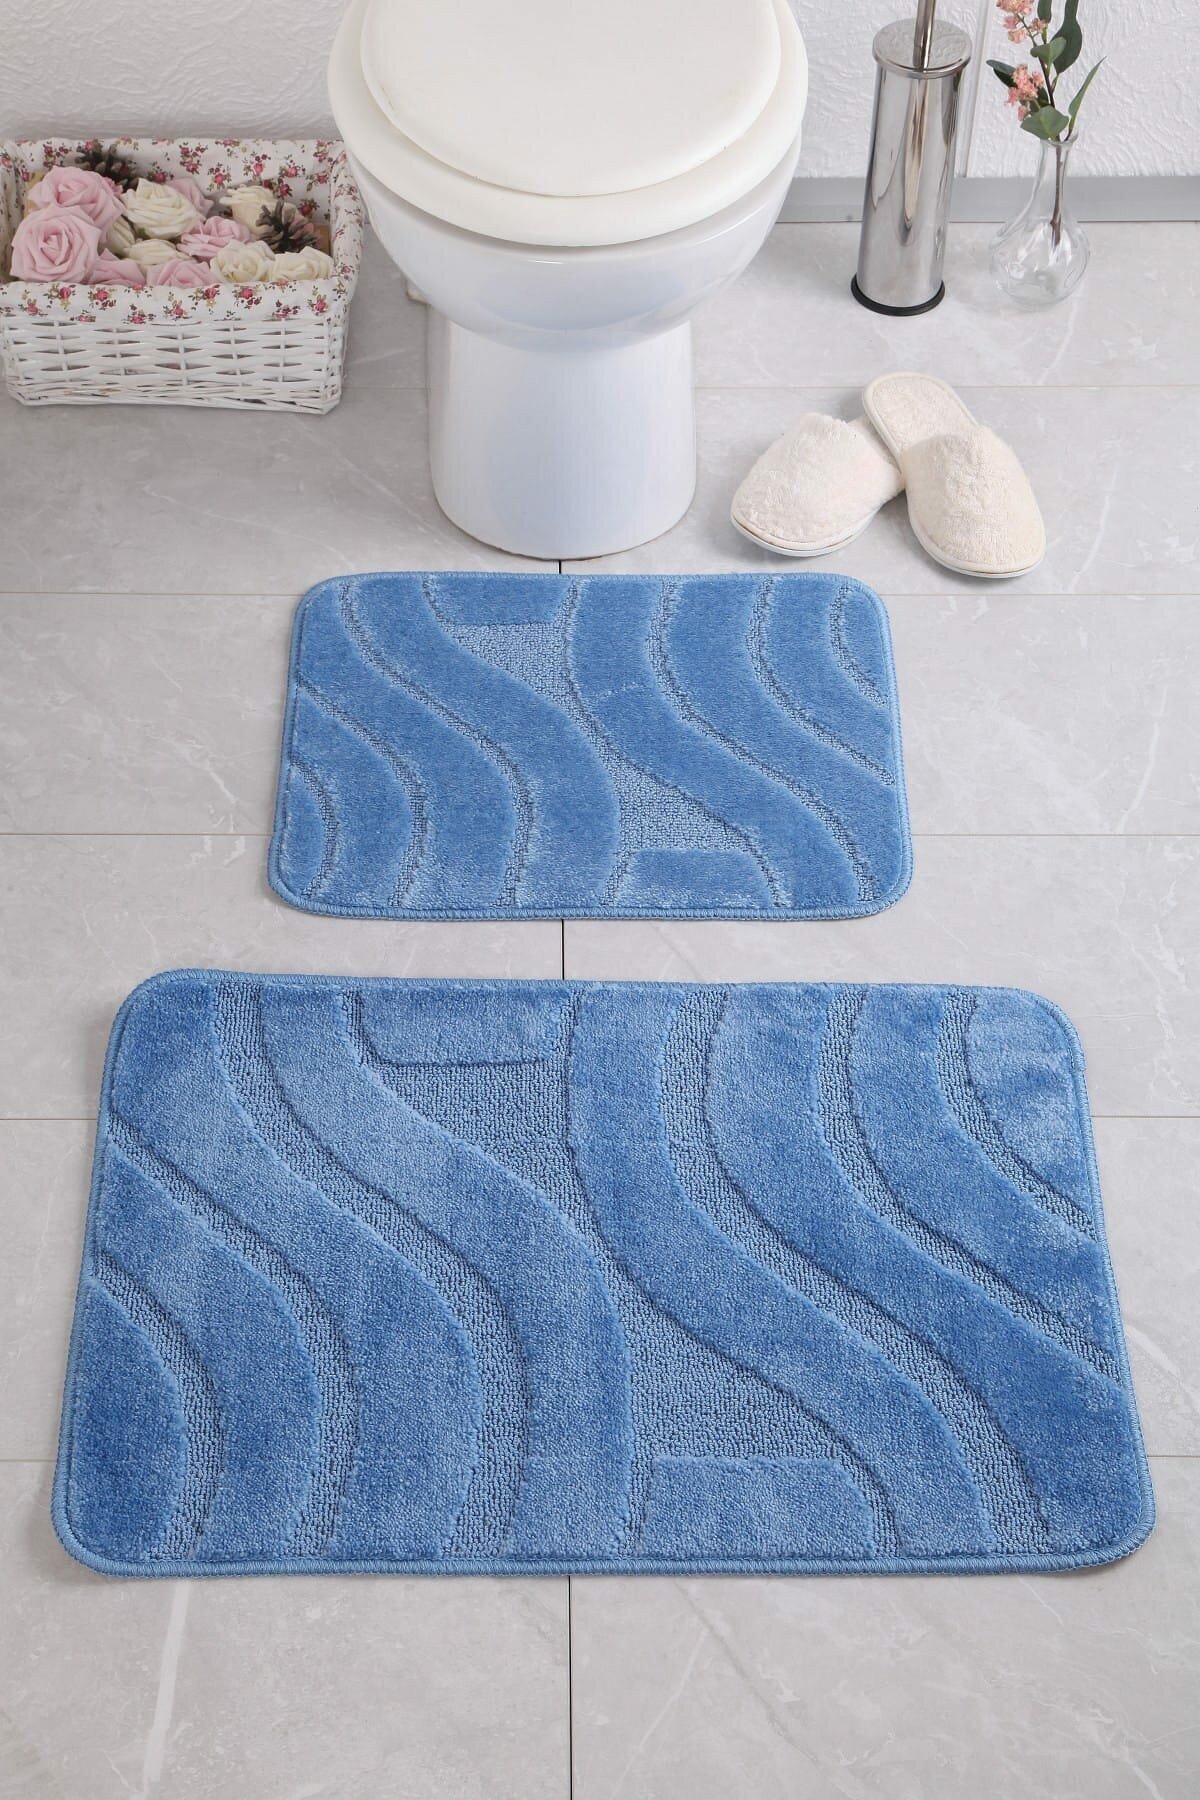 Wayfair Basics Aguon Plush Rectangle Non-Slip 2 Piece Bath Rug Set (Set of 2) Wayfair Basics Color: Linen